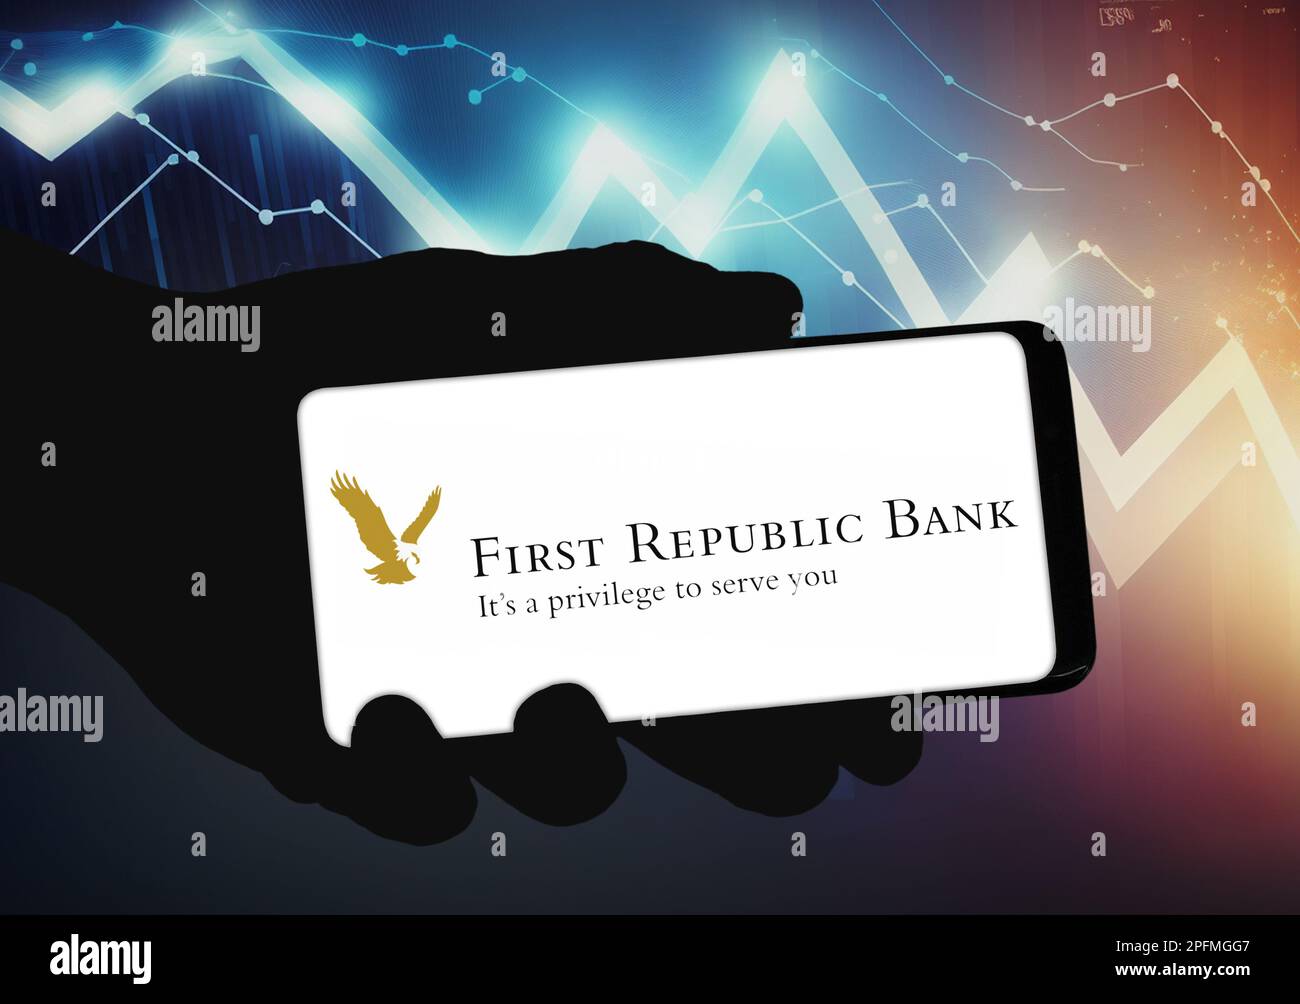 First Republic Bank - applicazione per smartphone Foto Stock